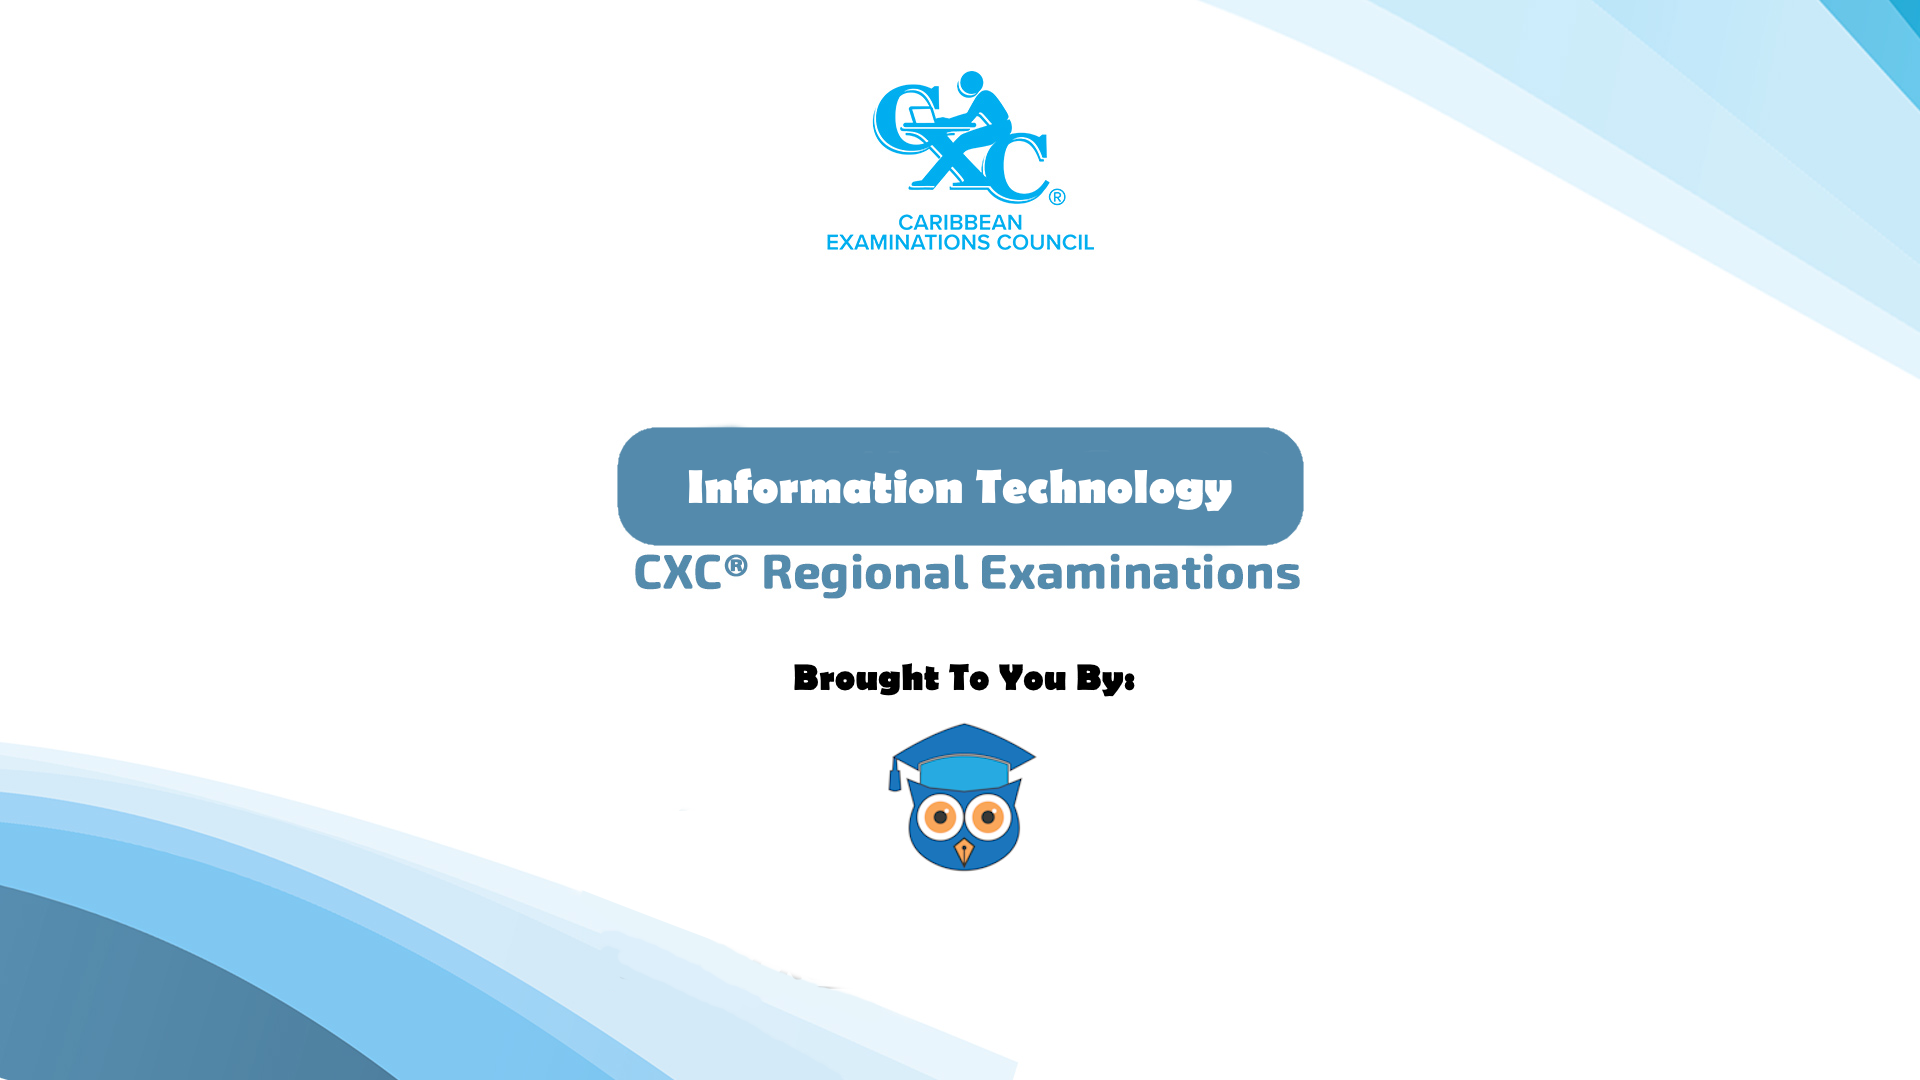 CSEC Information Technology